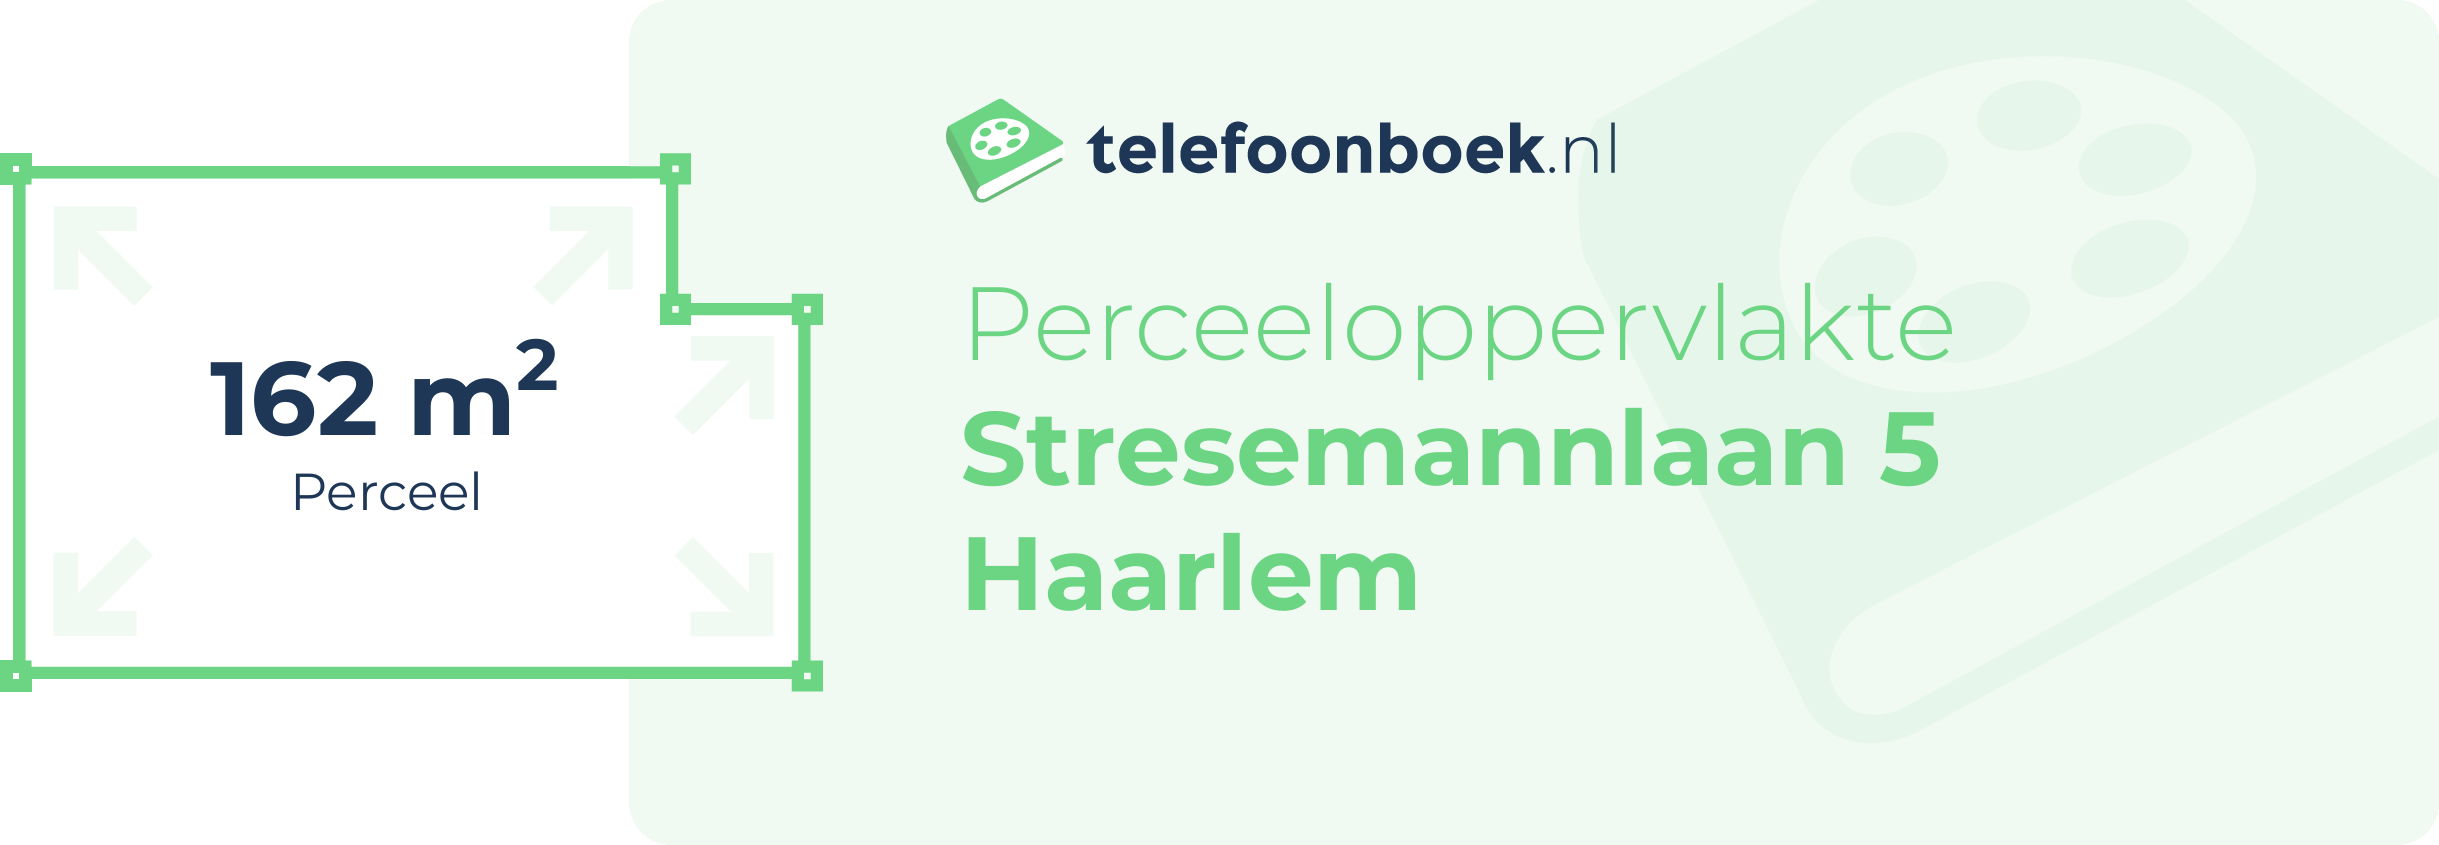 Perceeloppervlakte Stresemannlaan 5 Haarlem